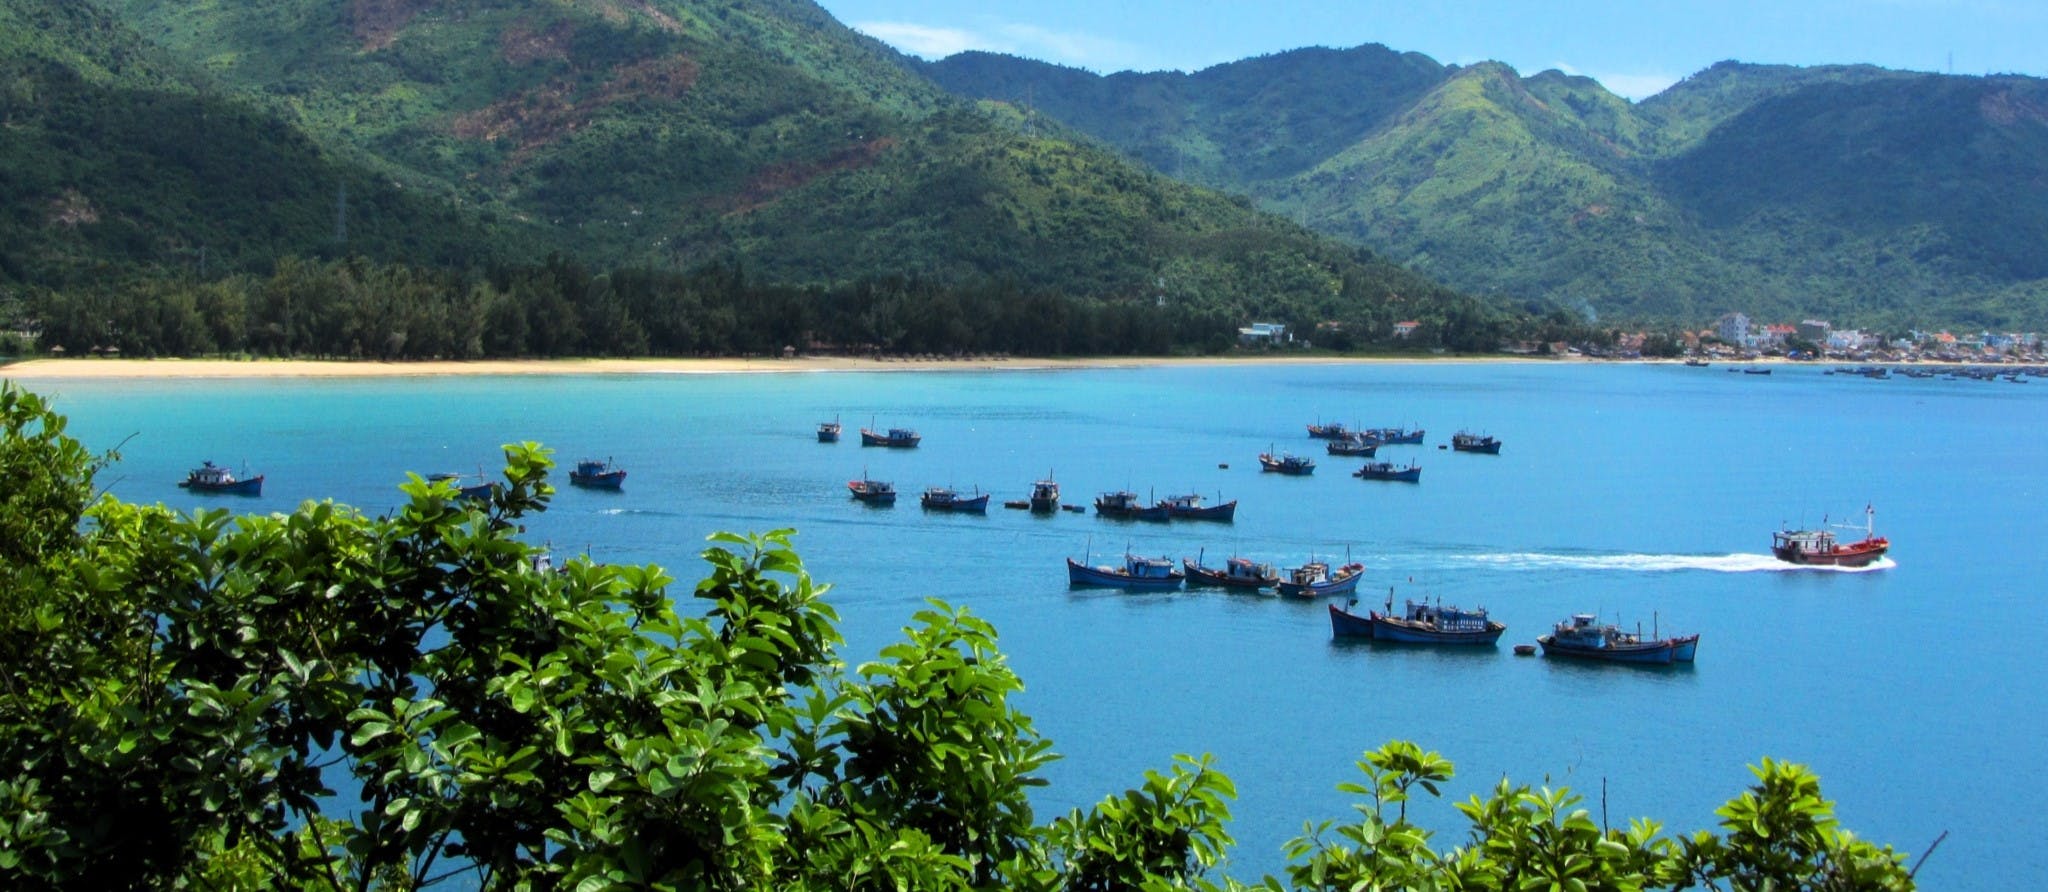 Dai Lanh Beach, Travel Guide, Vietnam